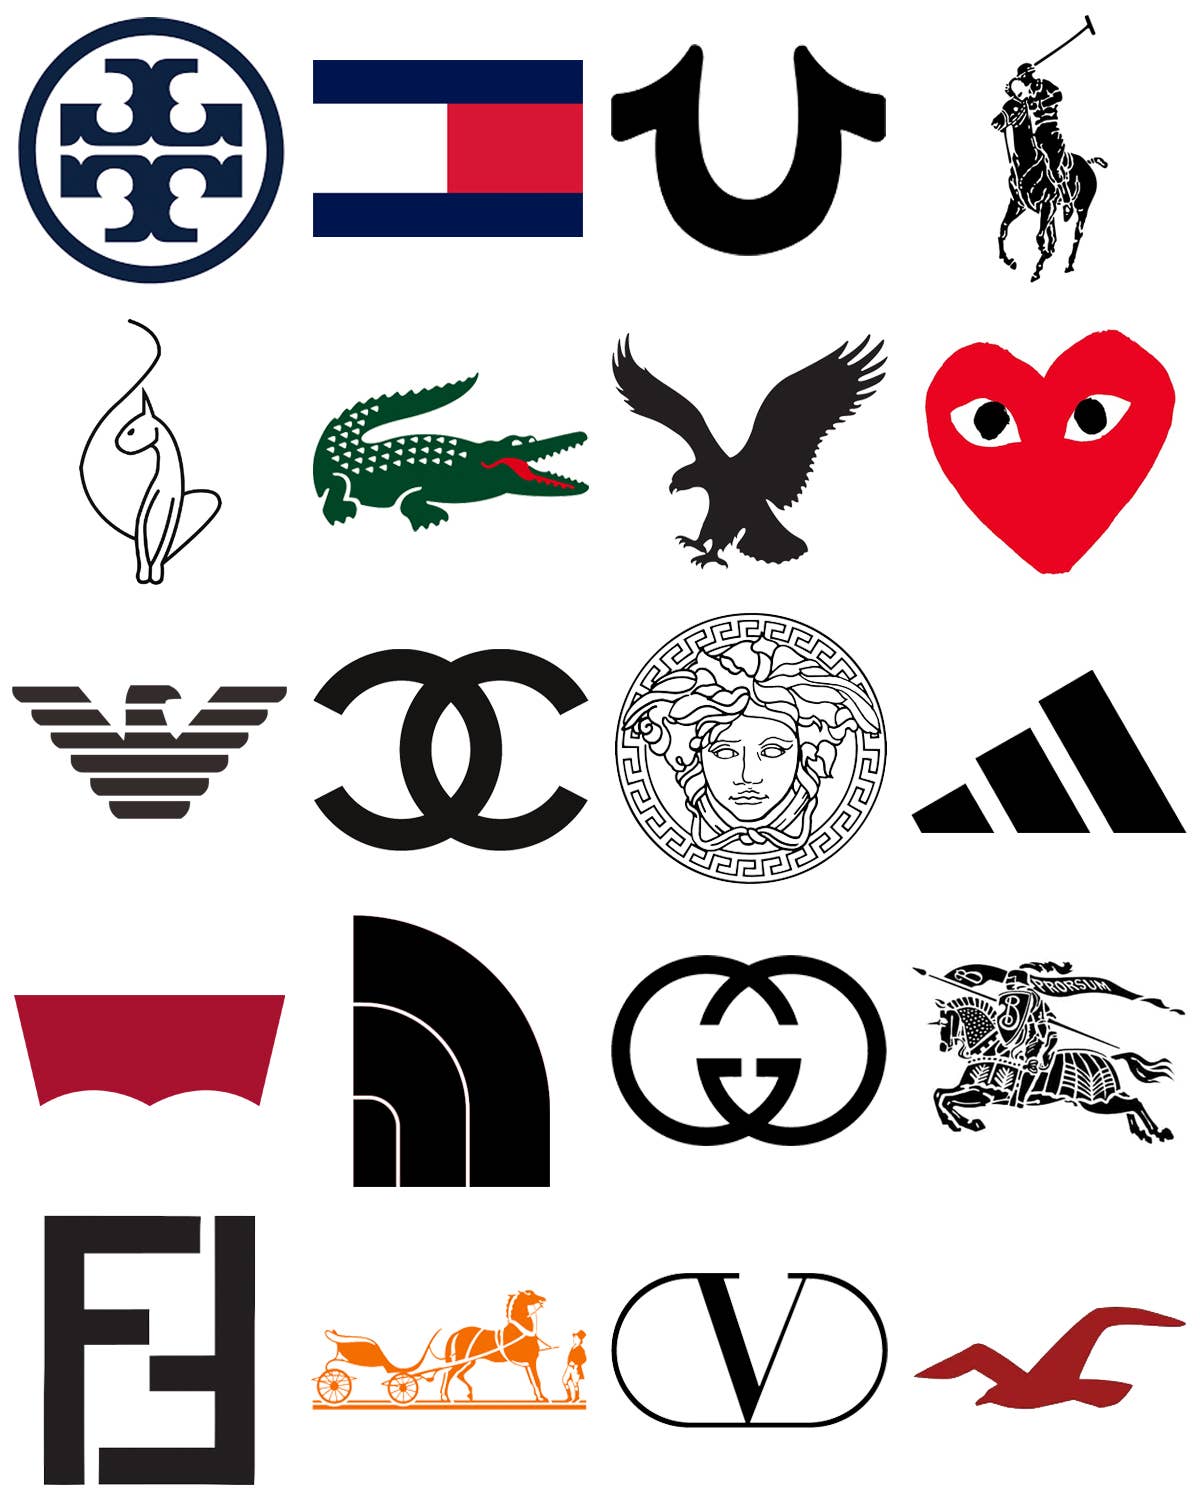 Clothing Brand Logos Quiz